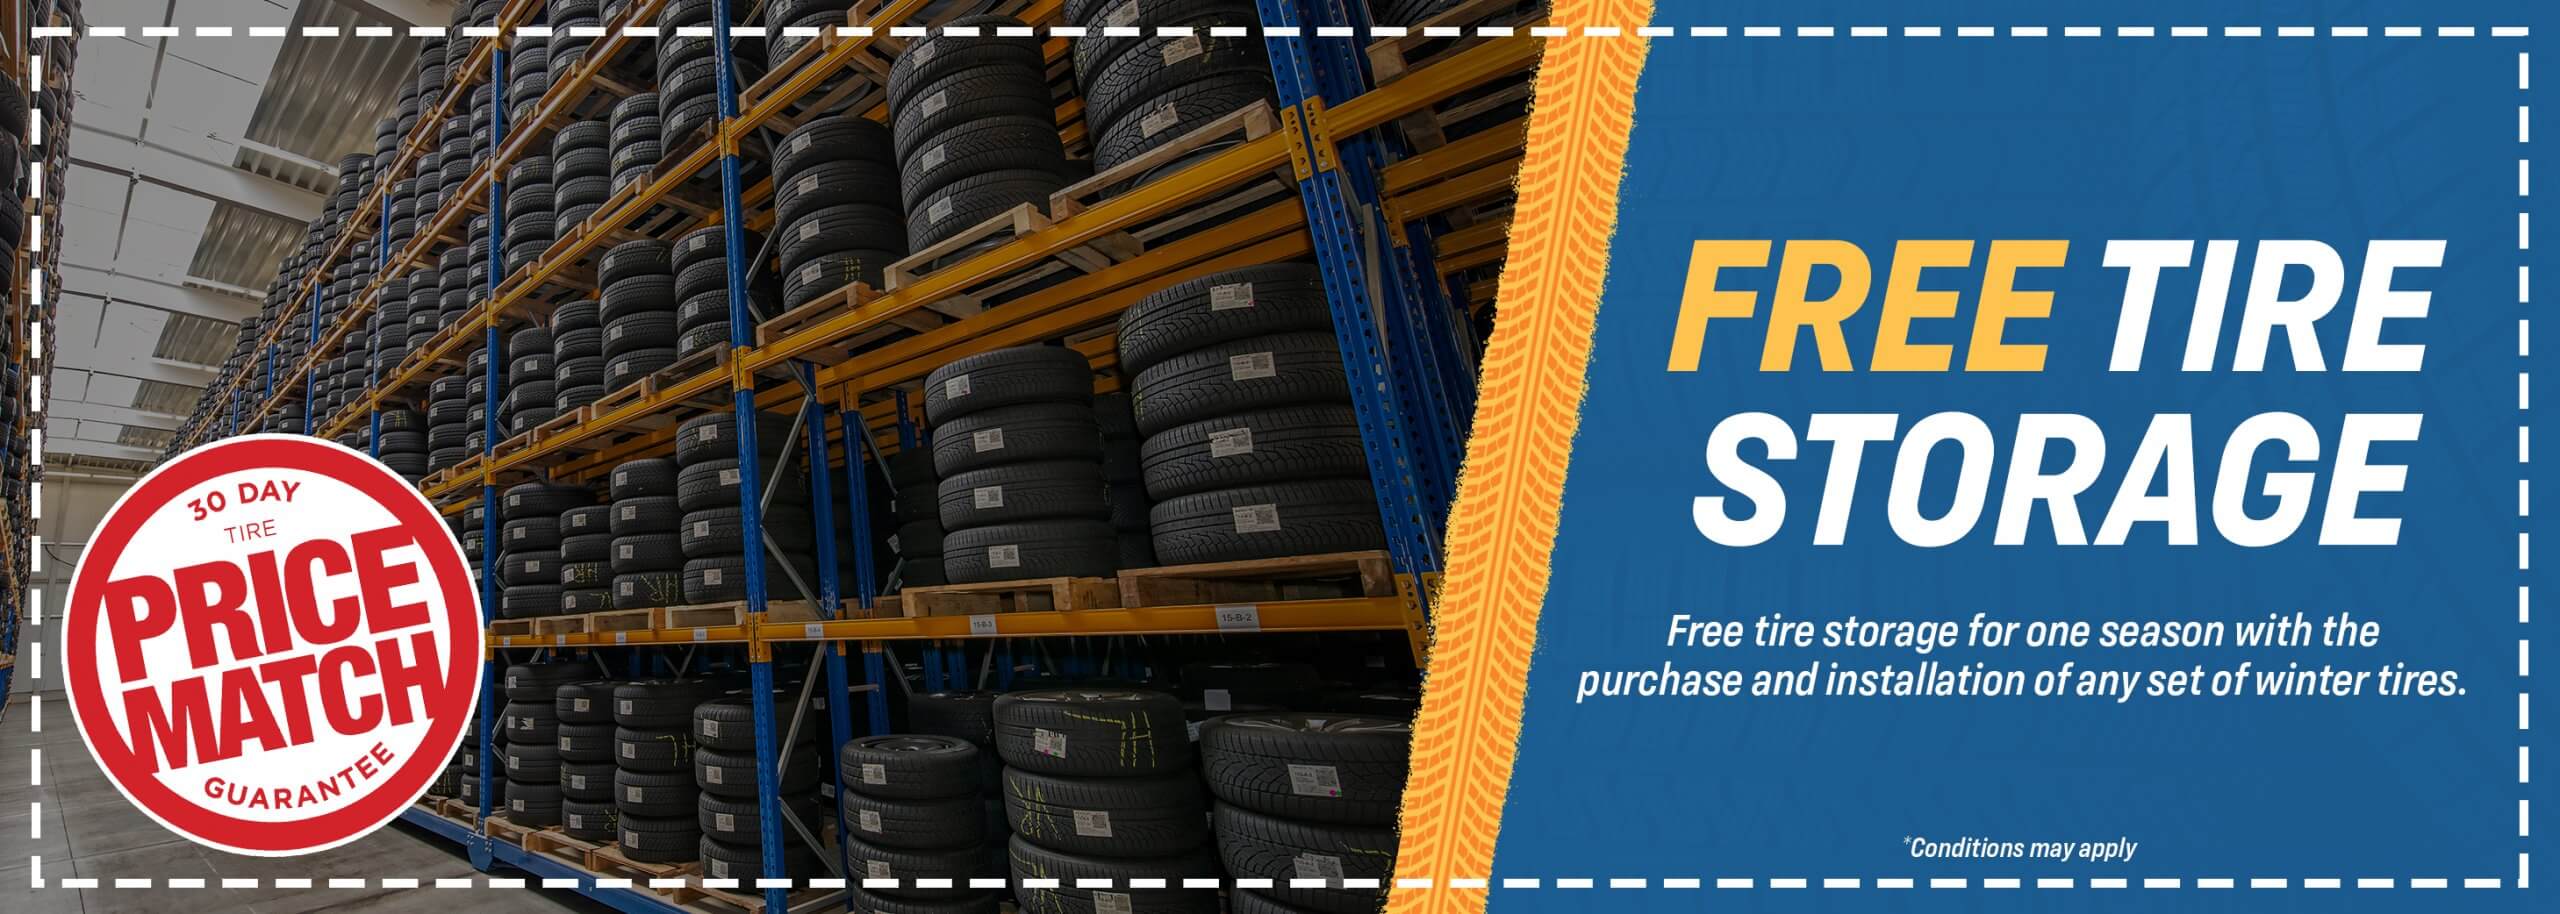 free tire storage